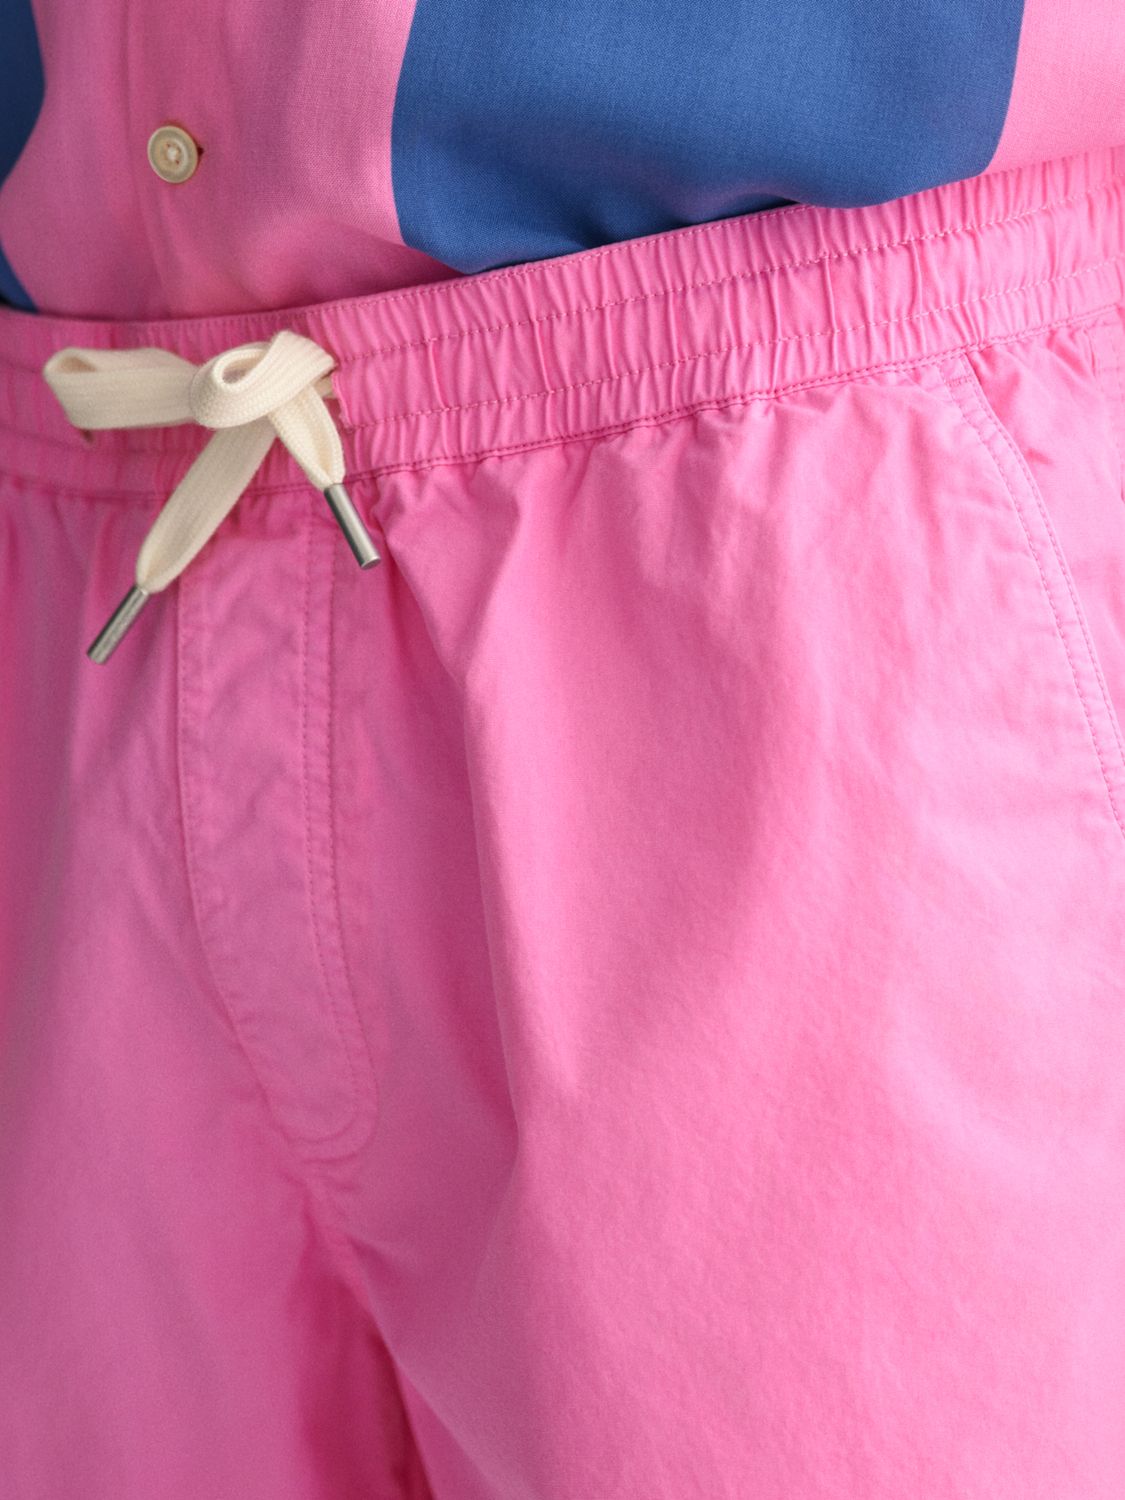 GANT Draw Cord Cotton Shorts, Sachet Pink, S